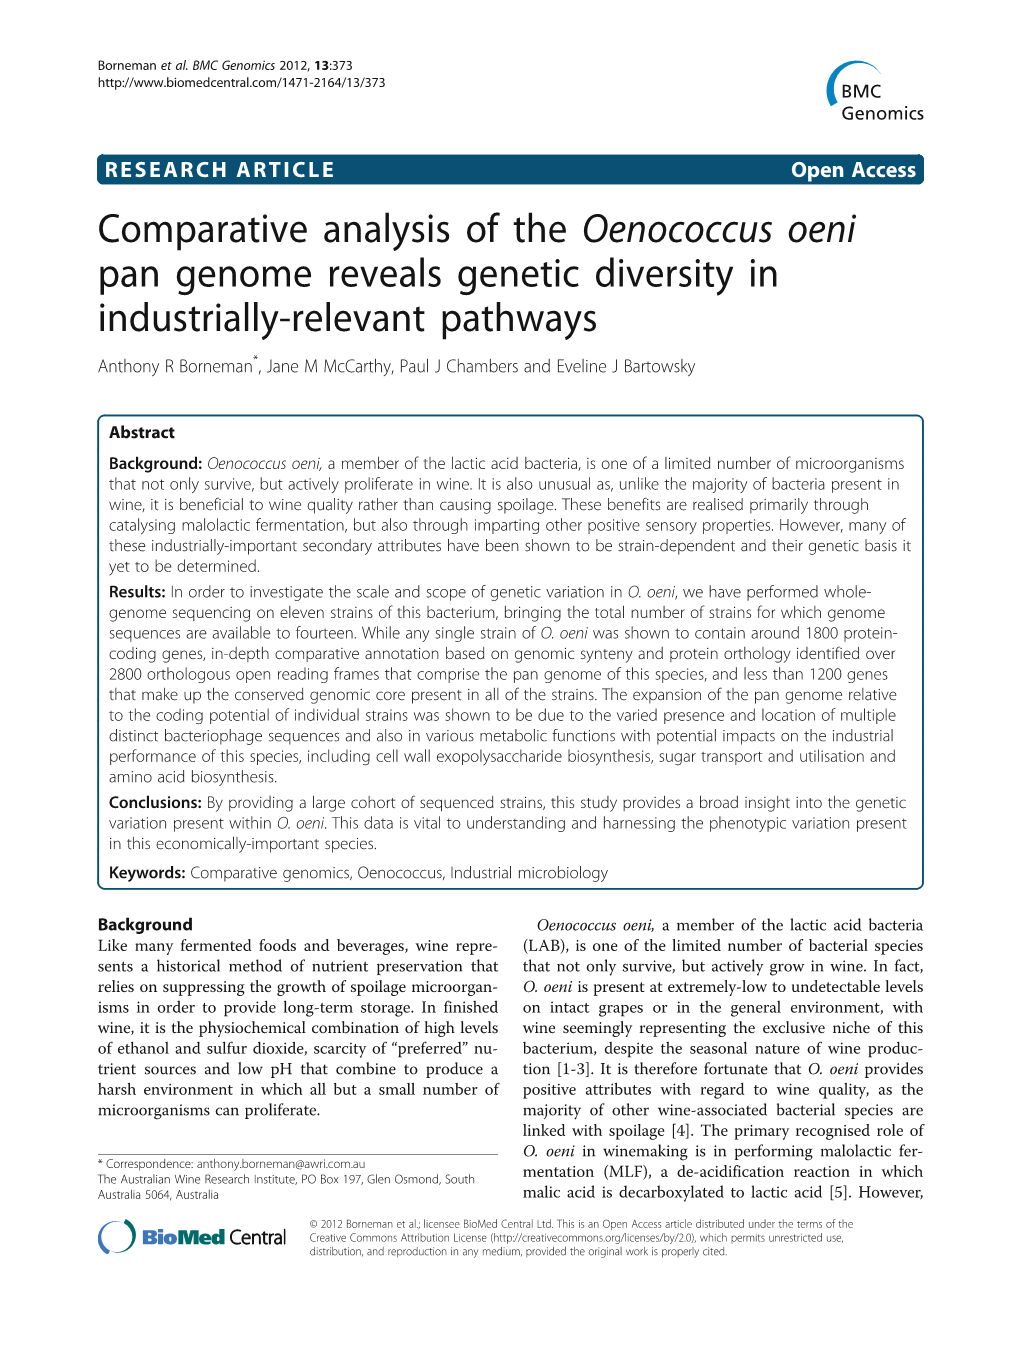 Comparative Analysis of the Oenococcus Oeni Pan Genome